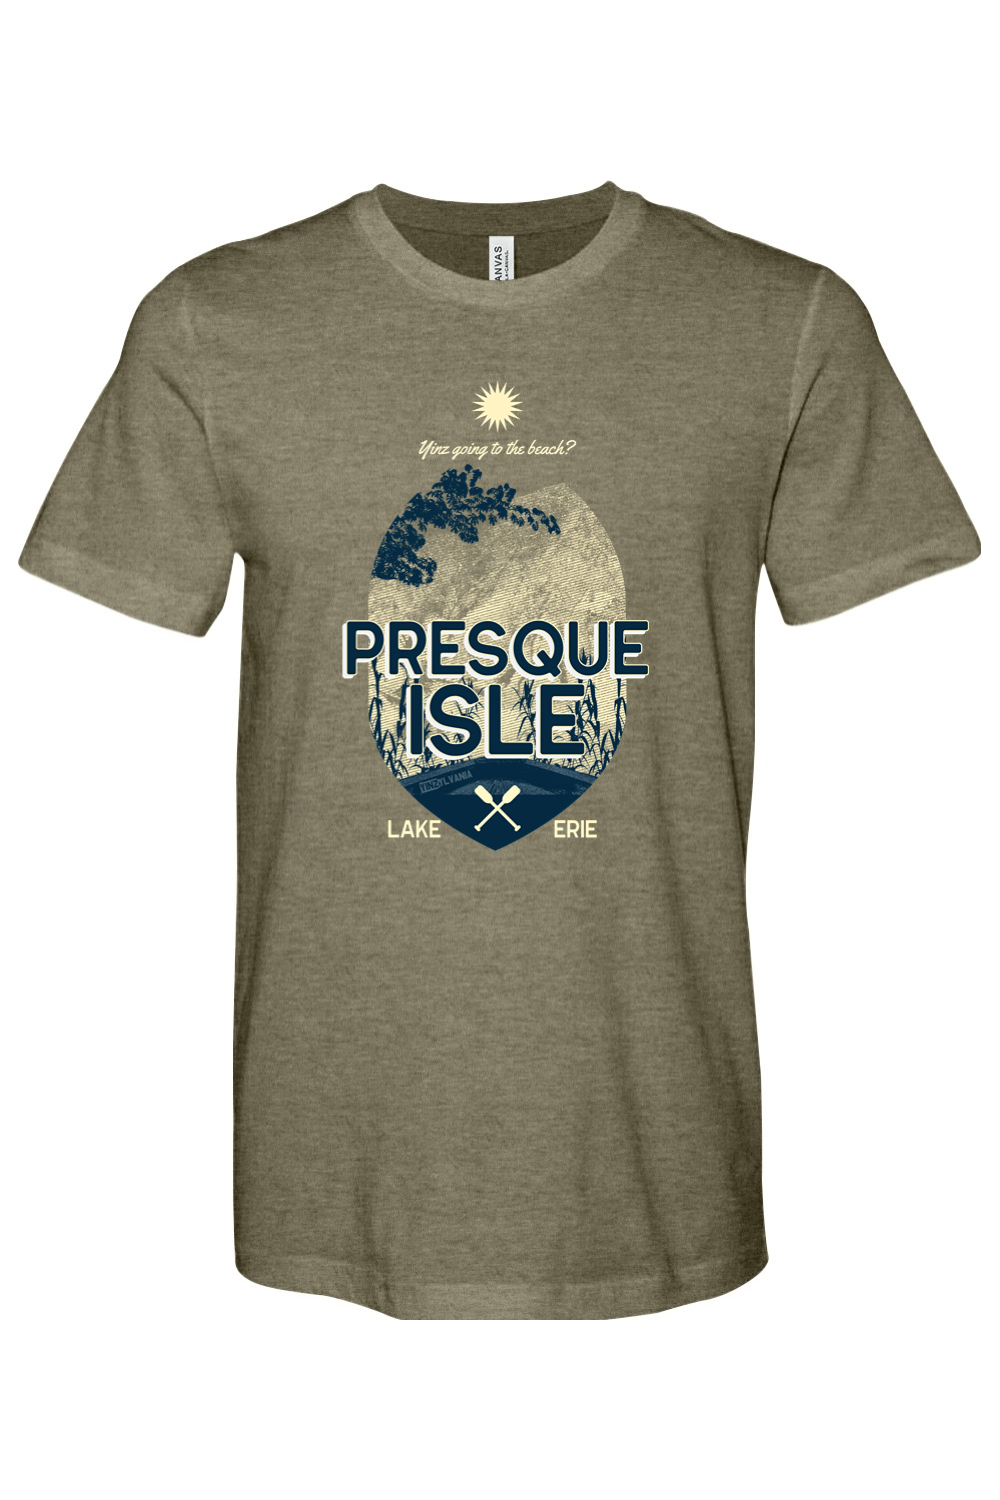 Presque Isle - Lake Erie - Yinzylvania